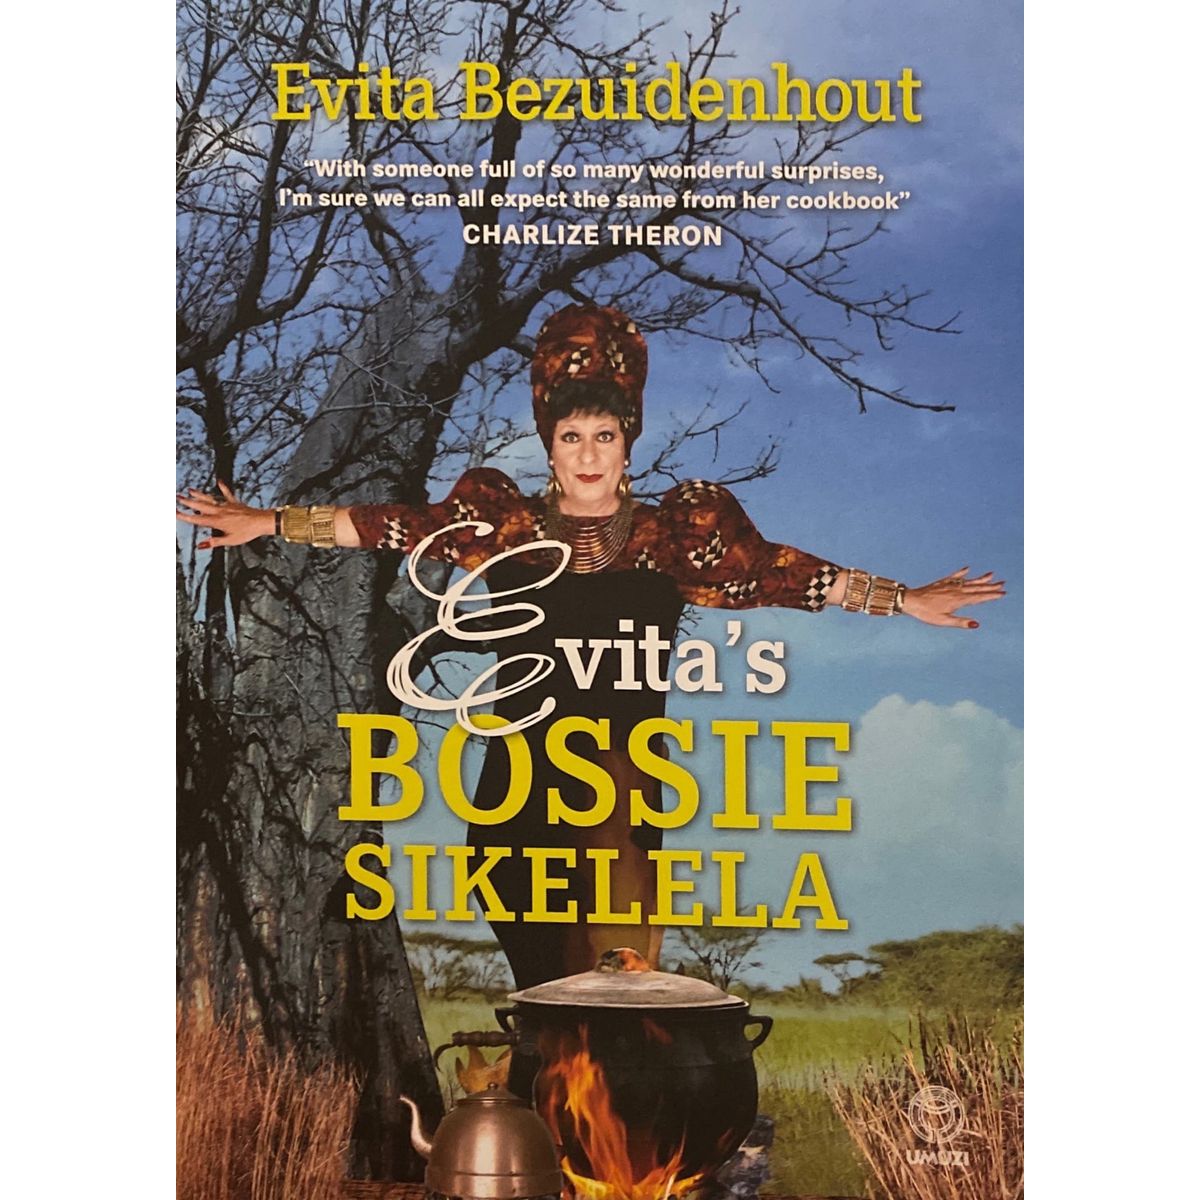 ISBN: 9781415201565 / 1415201560 - Evita's Bossie Sikelela by Evita Bezudenhout [2012]